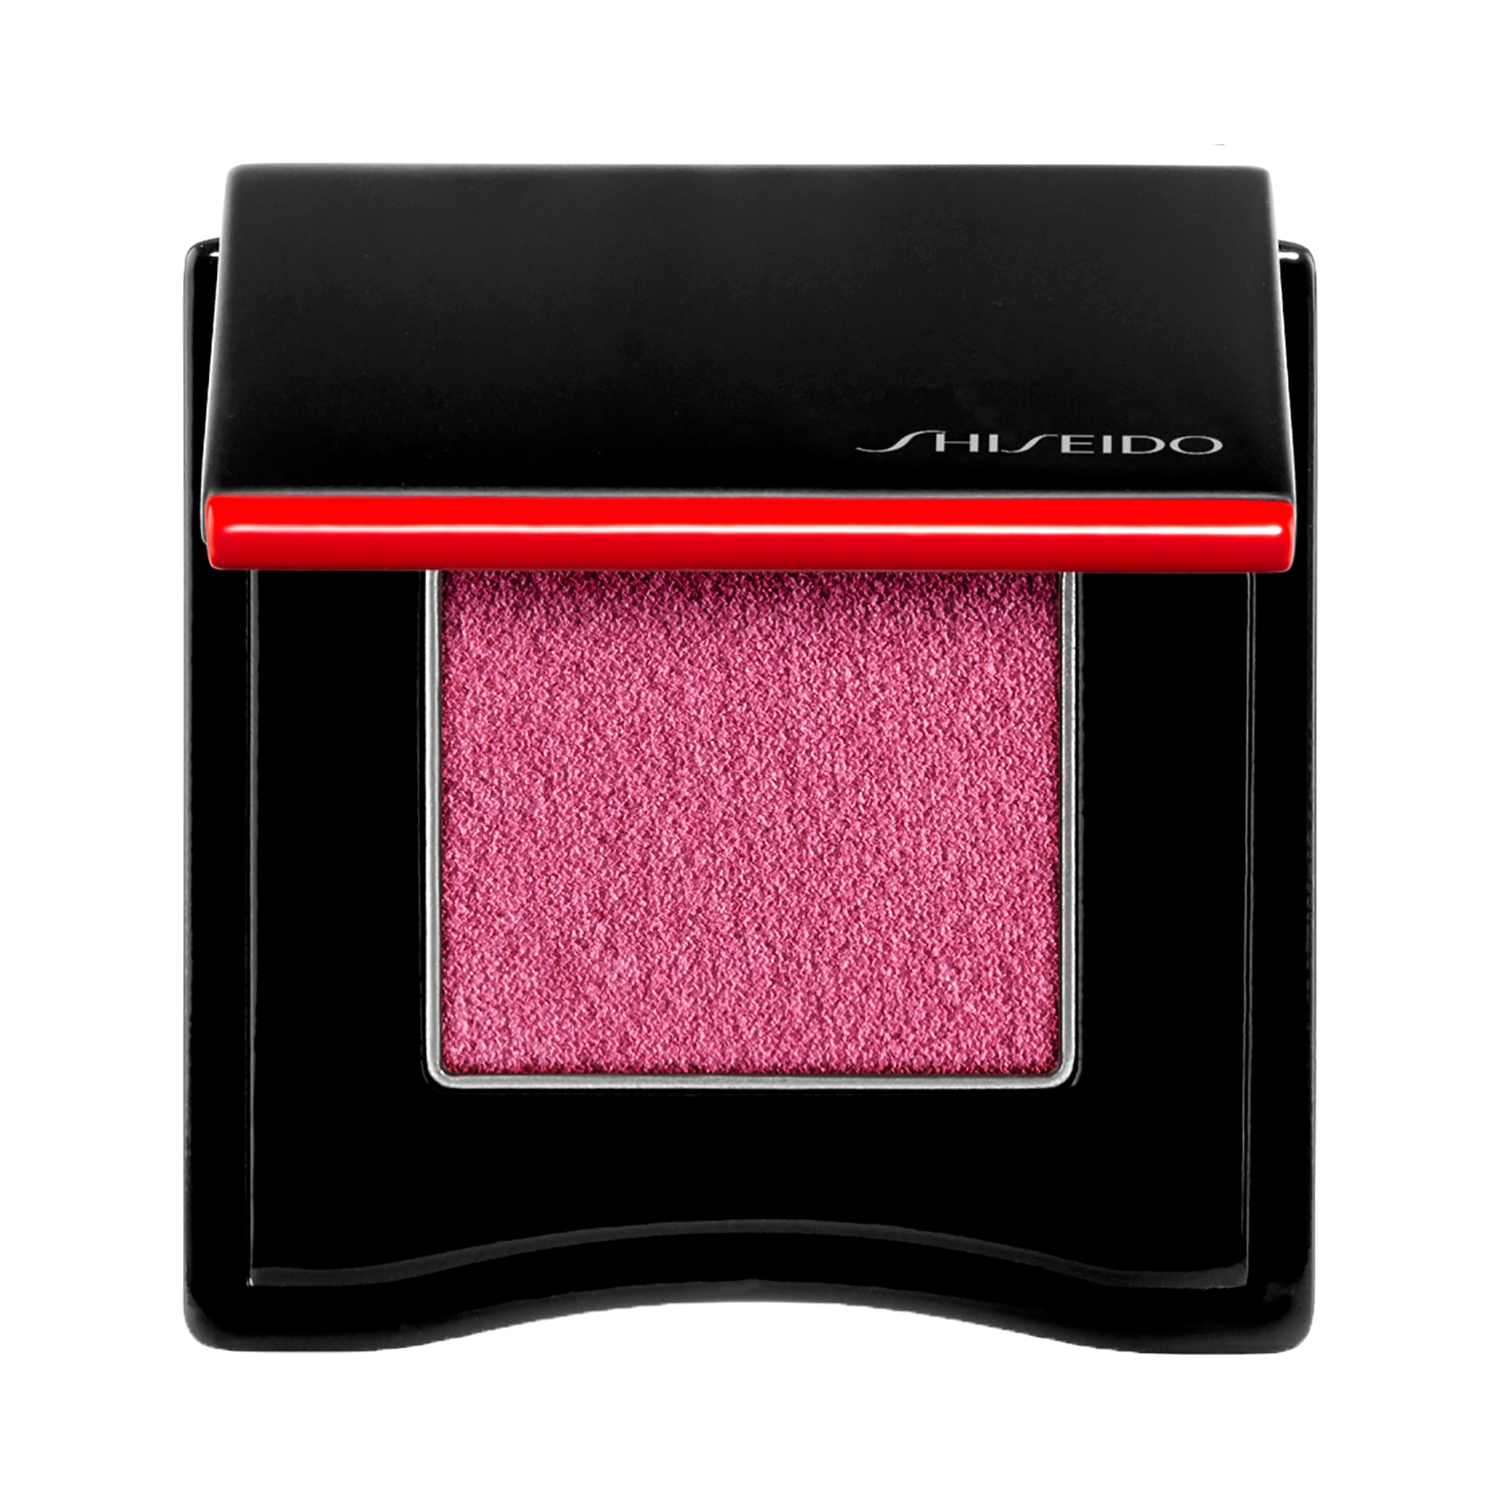 Shiseido | Shiseido Pop Powdergel Eye Shadow - 11 Waku Pink (2.2g)